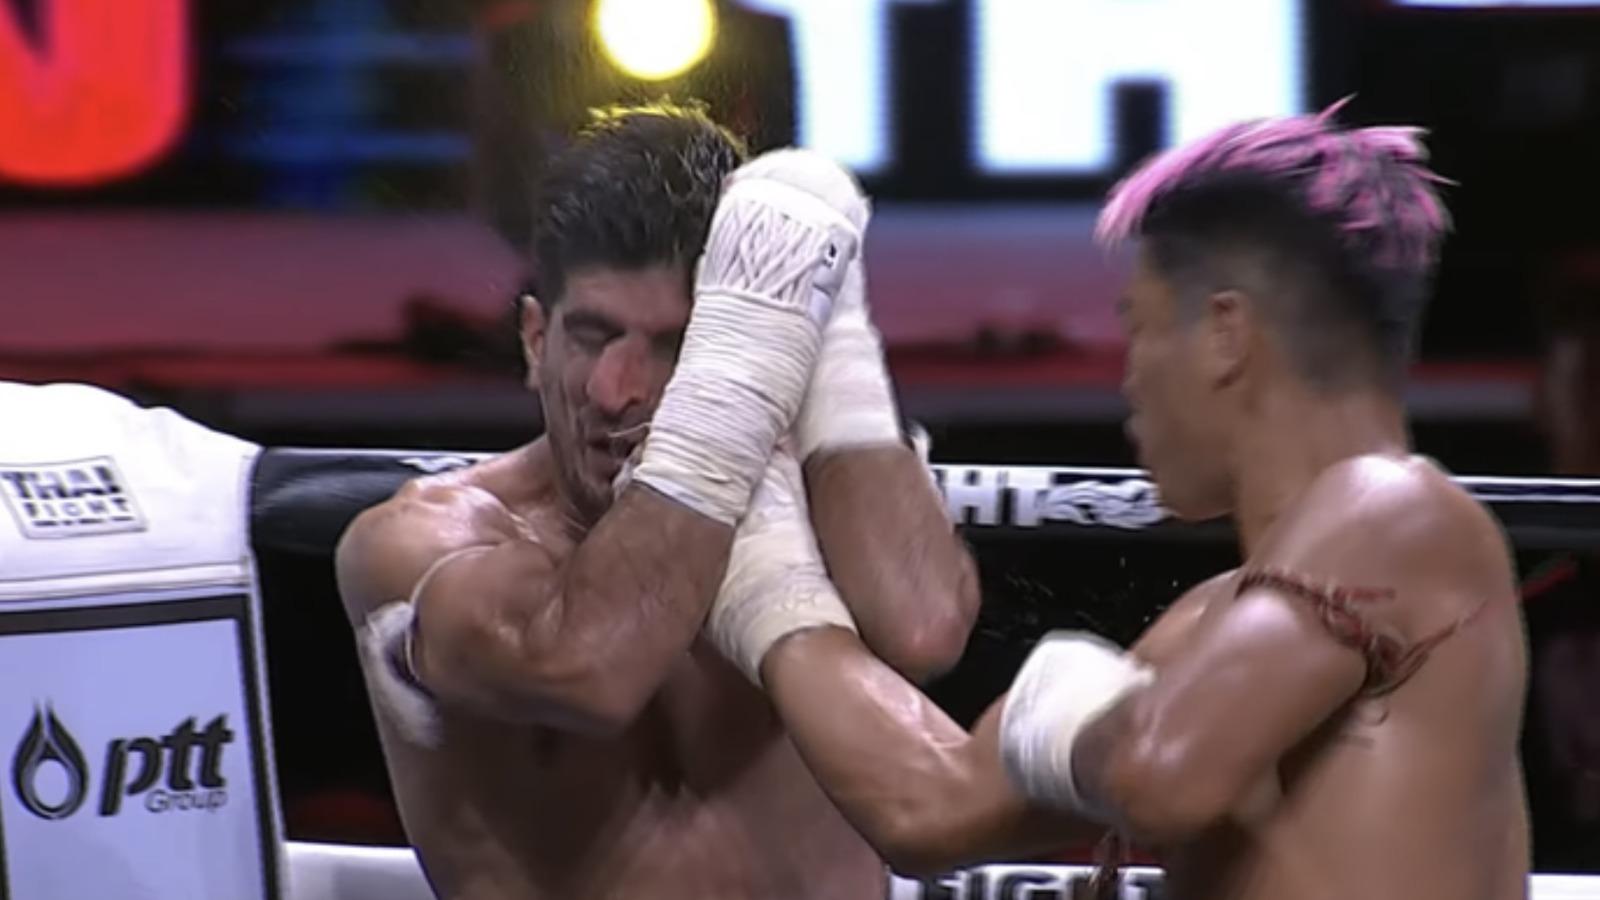 A Muay Thai fighter goes viral online after disgusting broken nose incident